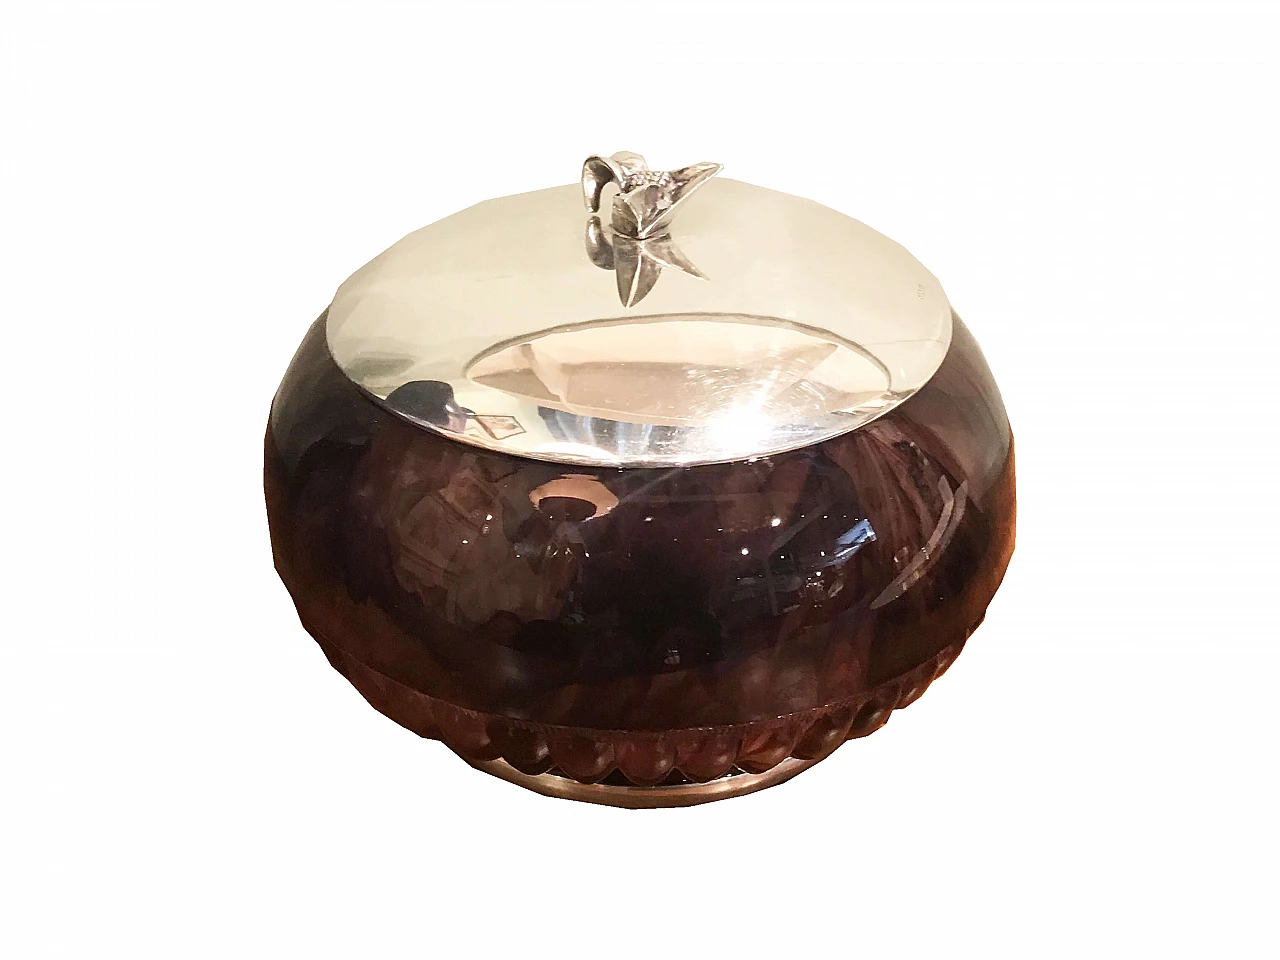 Bonbon bowl, from George Davidson's Cloud Glass series, 1920 1072716